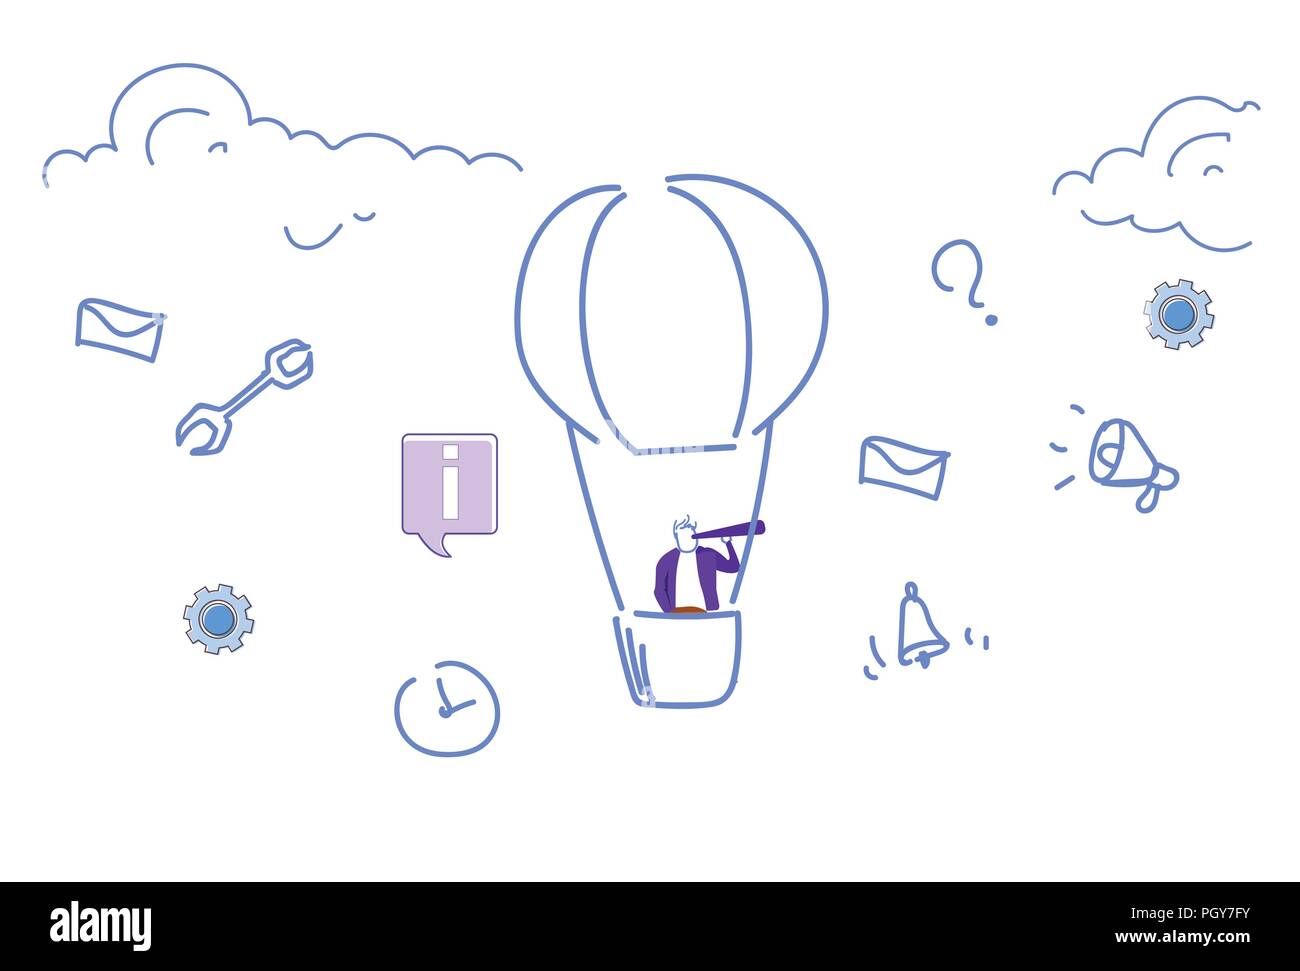 Geschäftsmann fliegen Ballon suchen Fernglas business Vision Concept social media Icons neue erfolgreiche Projekt Skizze doodle horizontal Stock Vektor